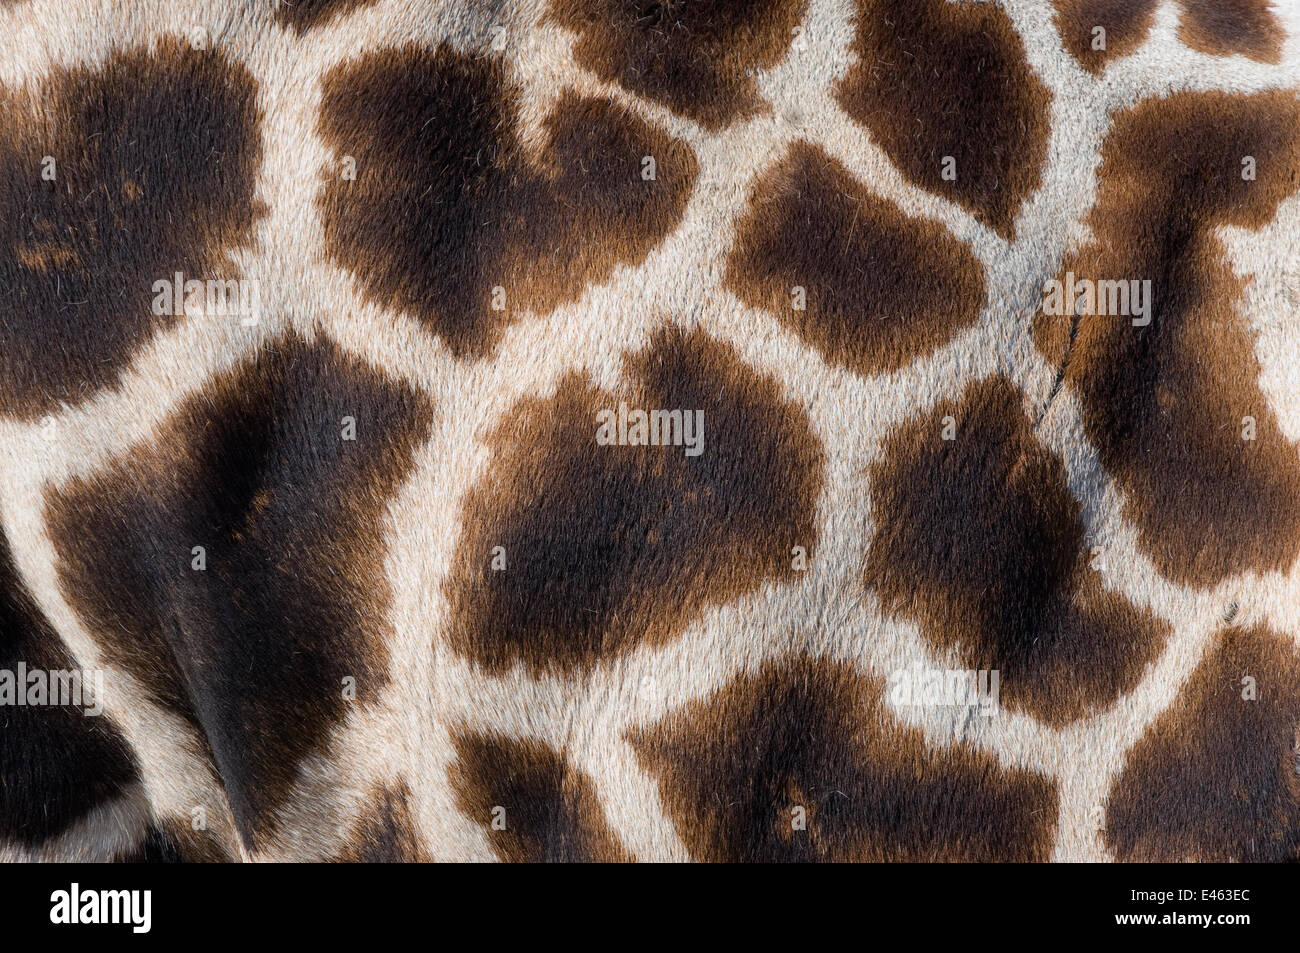 Rothschild Girafe (Giraffa camelopardalis rothschildi) close up de jeune veau modèle de peau, captive Banque D'Images